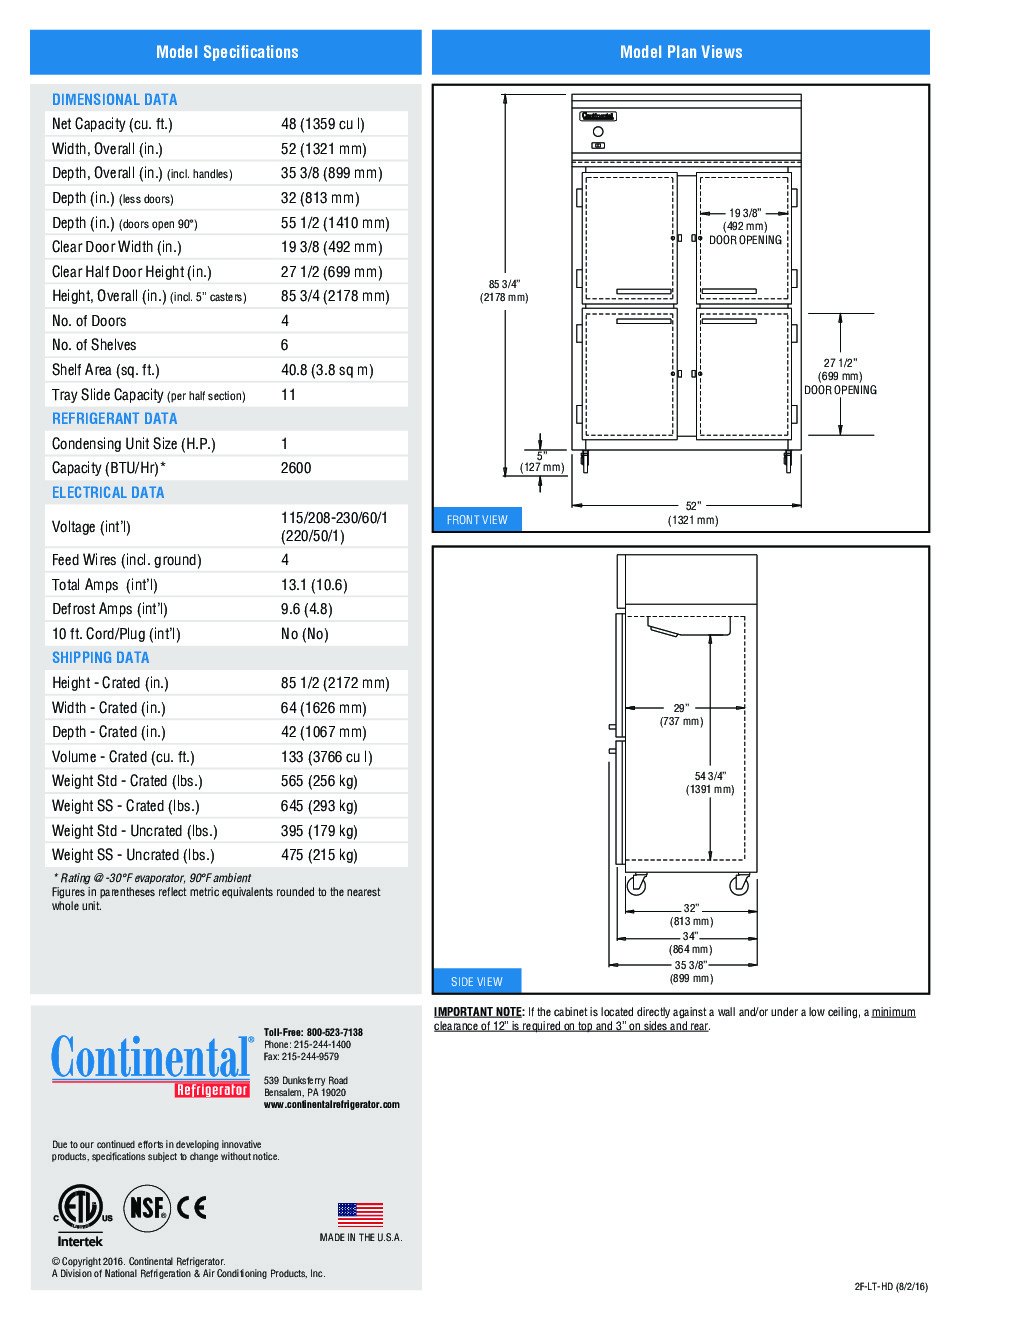 Continental Refrigerator 2F-LT-SS-HD Reach-In Low Temperature Freezer